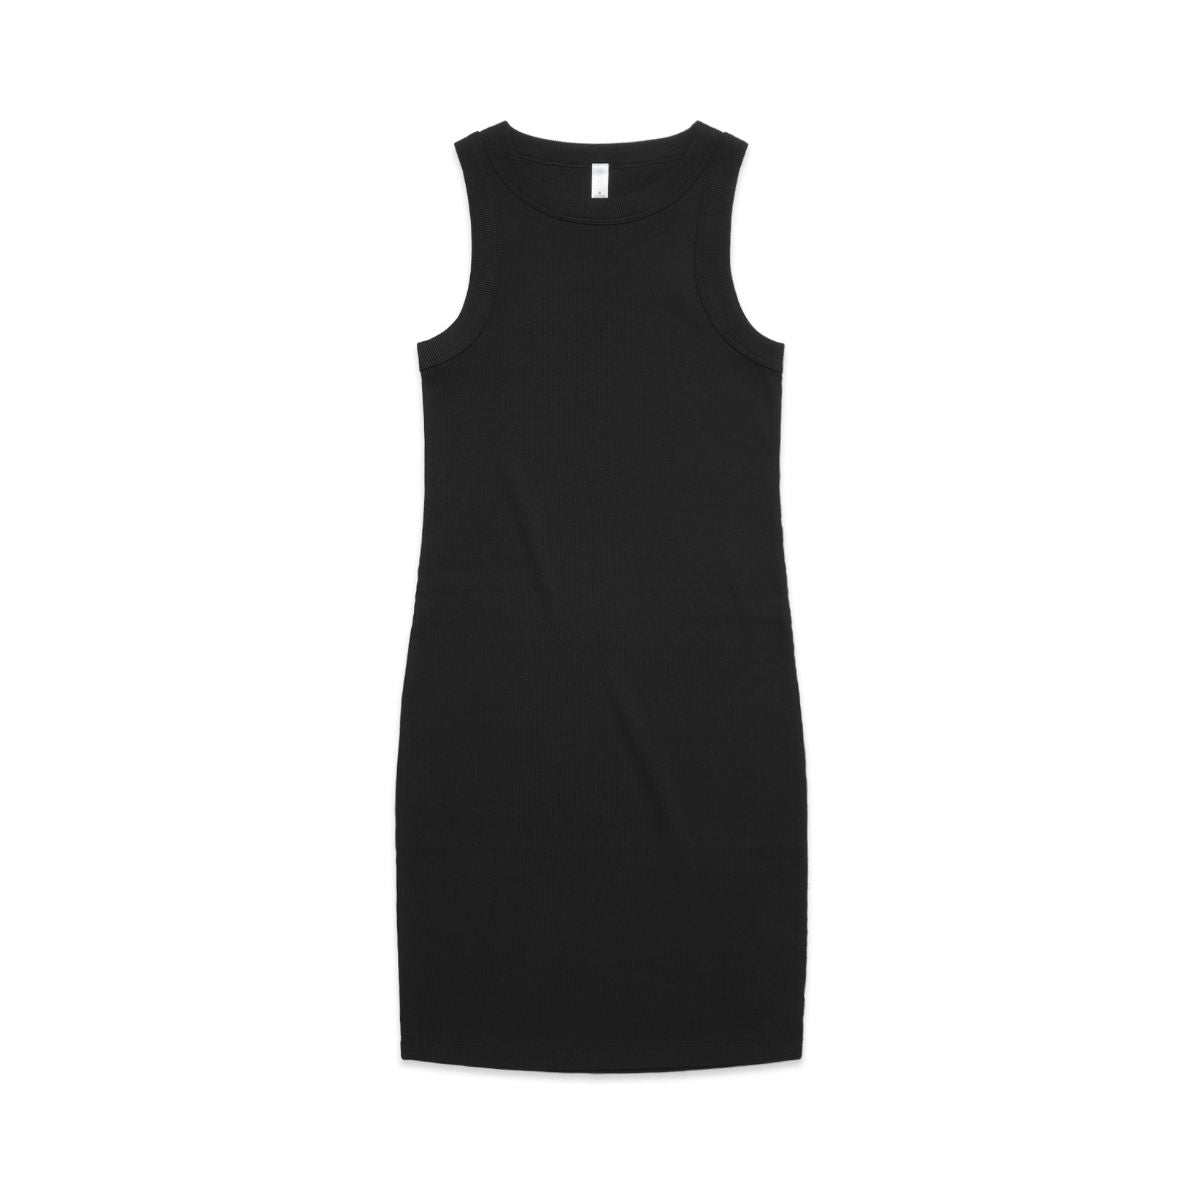 ascolour Women's Organic Rib Dress 4066G